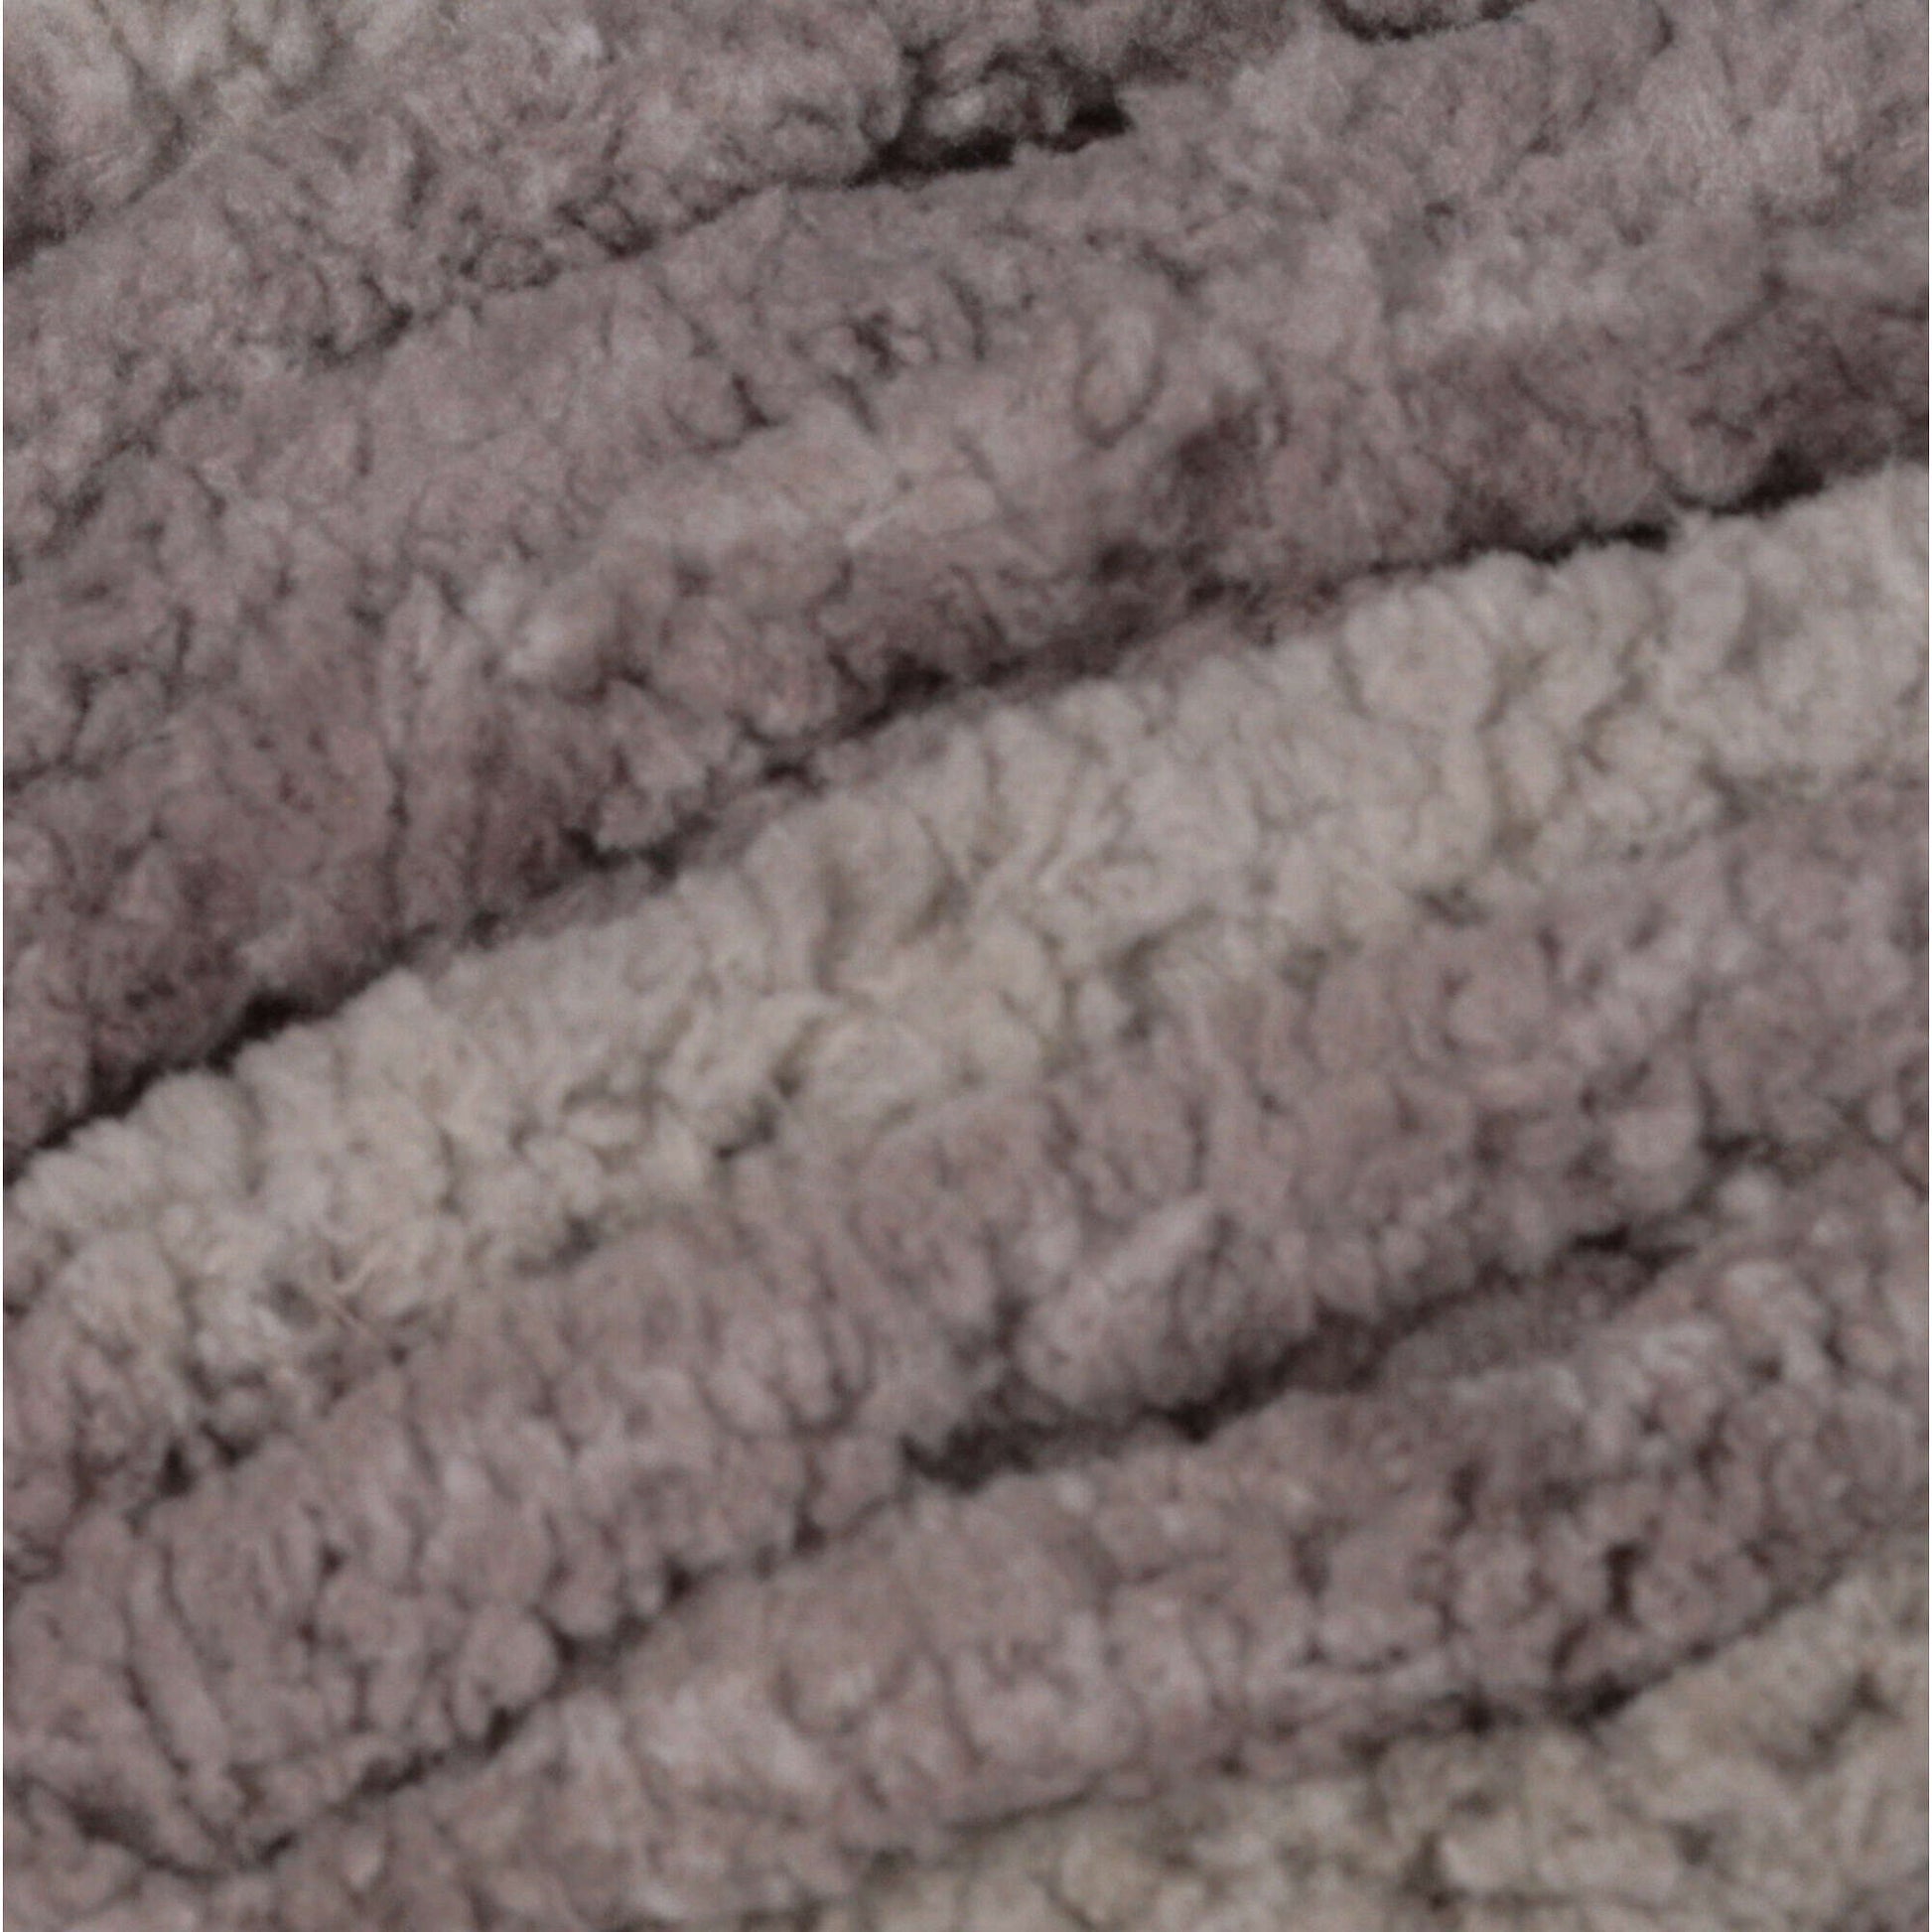  Bernat Blanket Yarn (3-Pack) Cranberry 161200-705